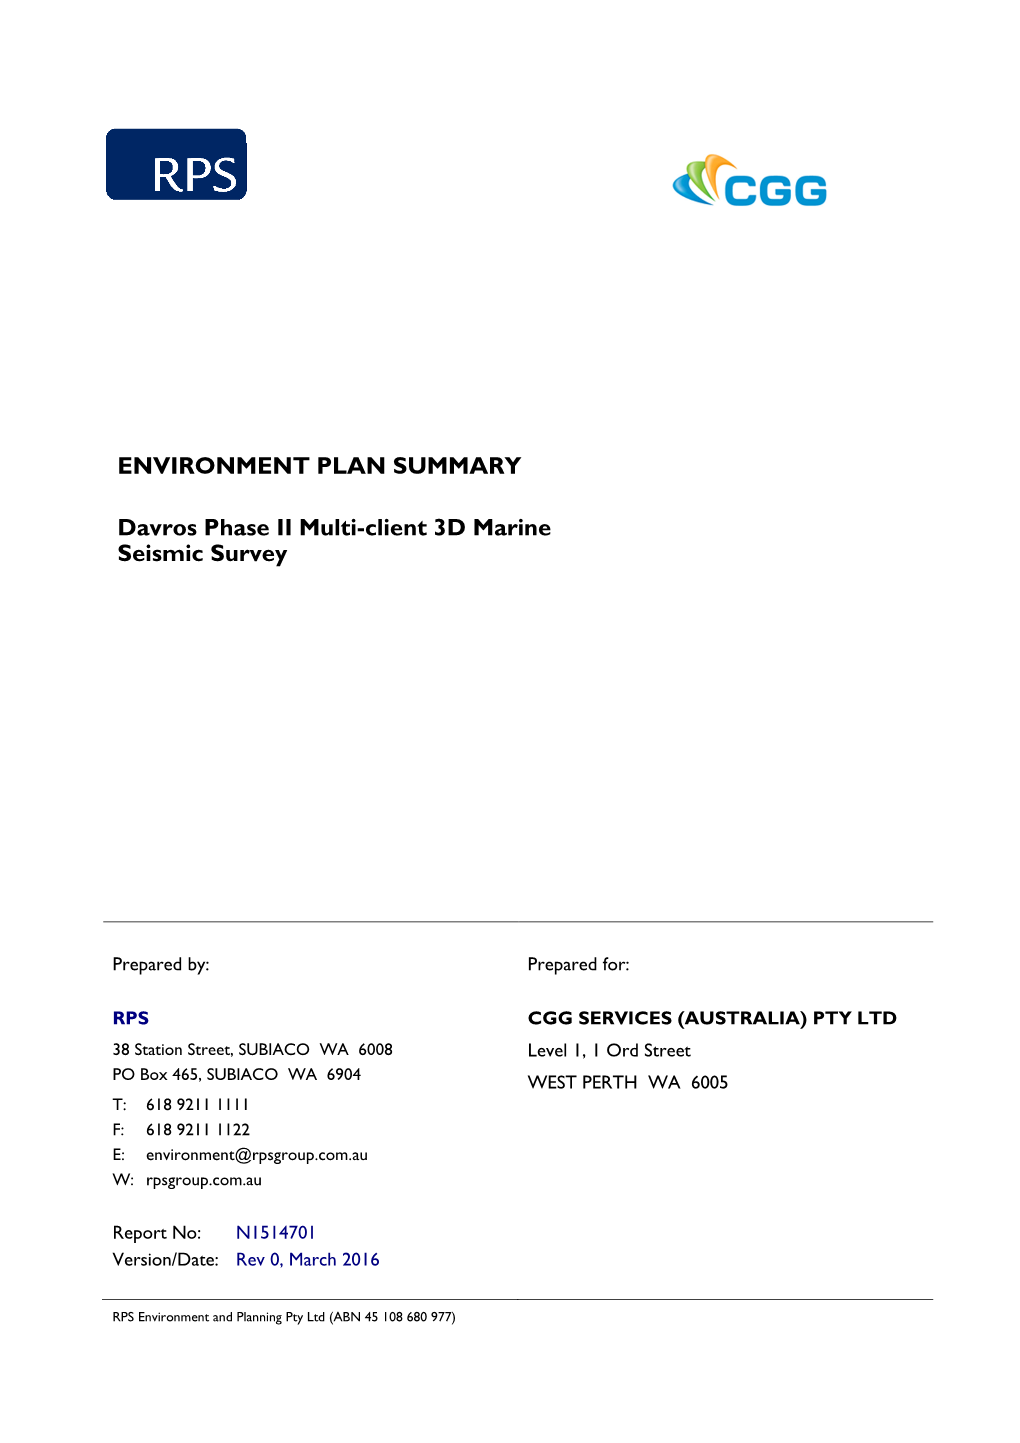 Environment Plan Summary Davros Phase II Multi-Client 3D Marine Seismic Survey